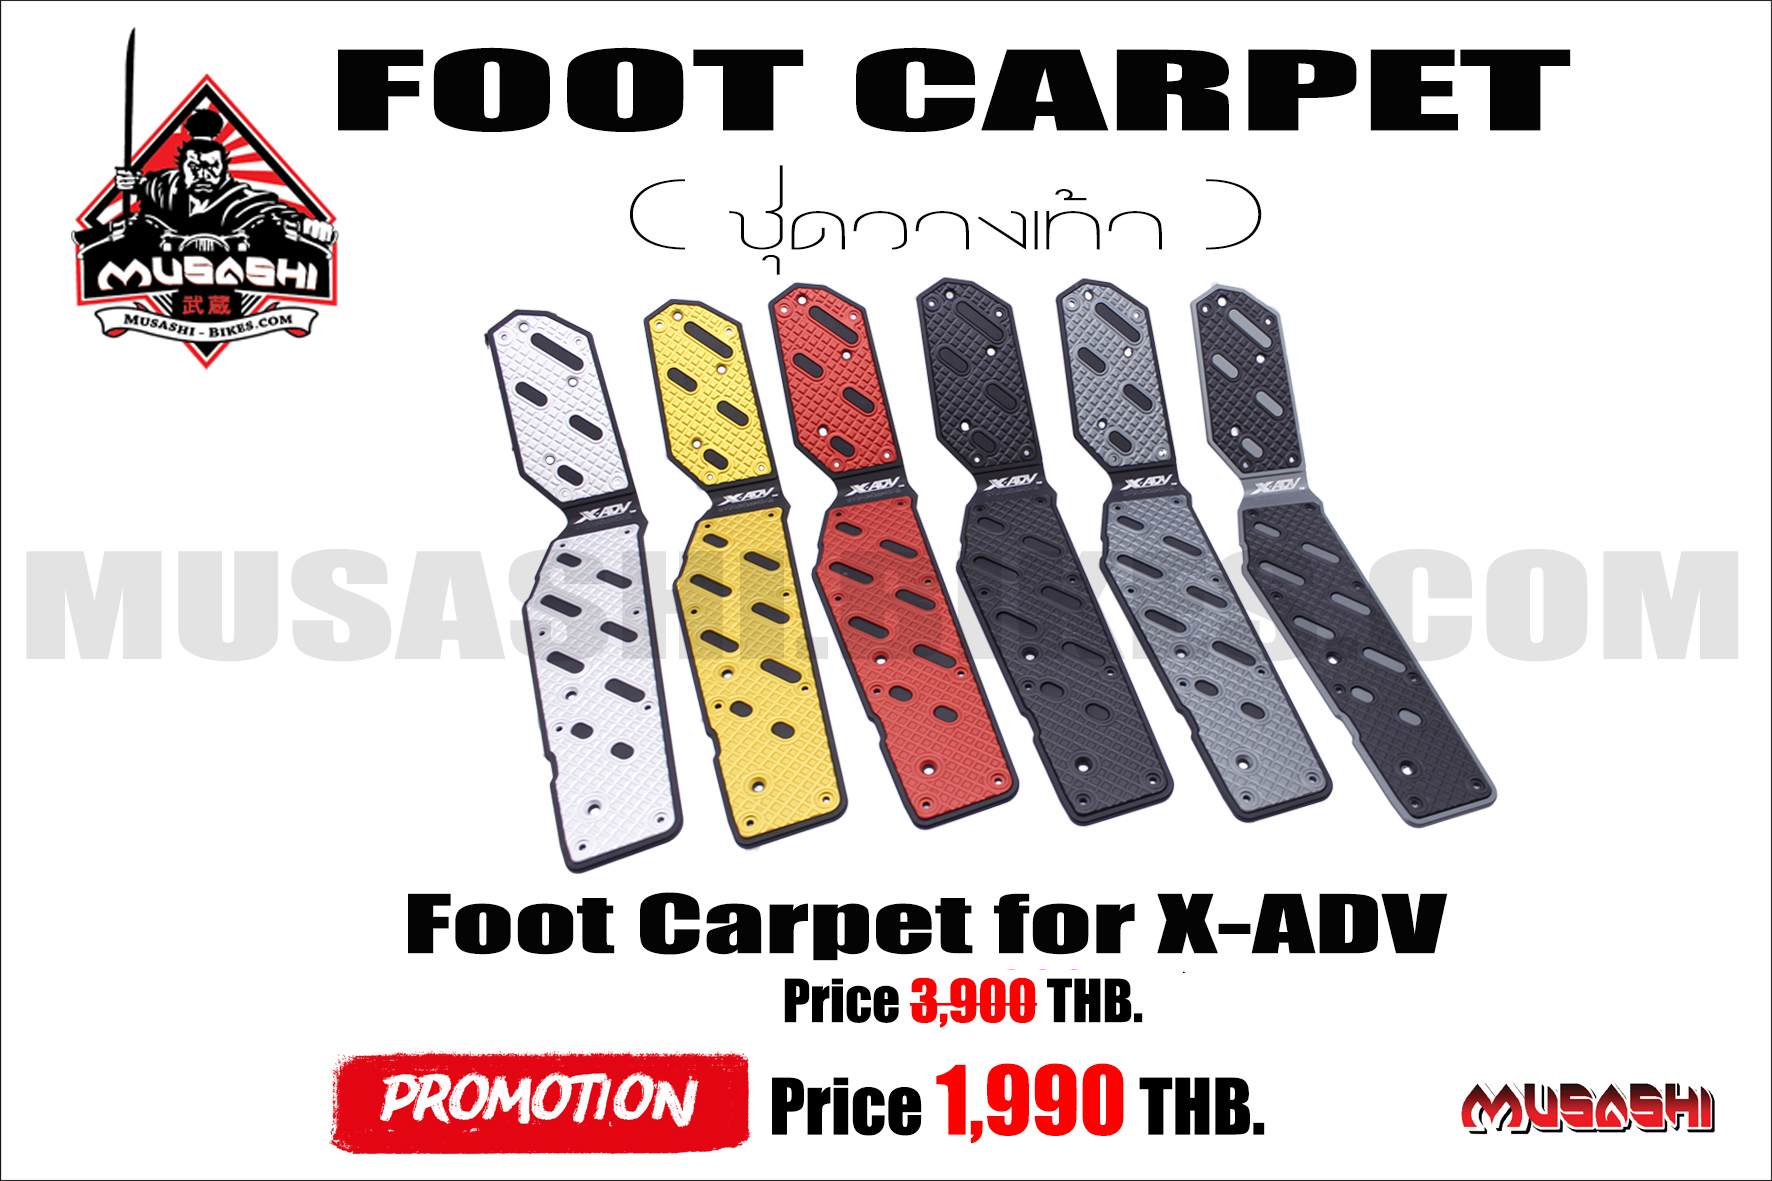 Foot Carpet For X-ADV 750cc. - Black-Black